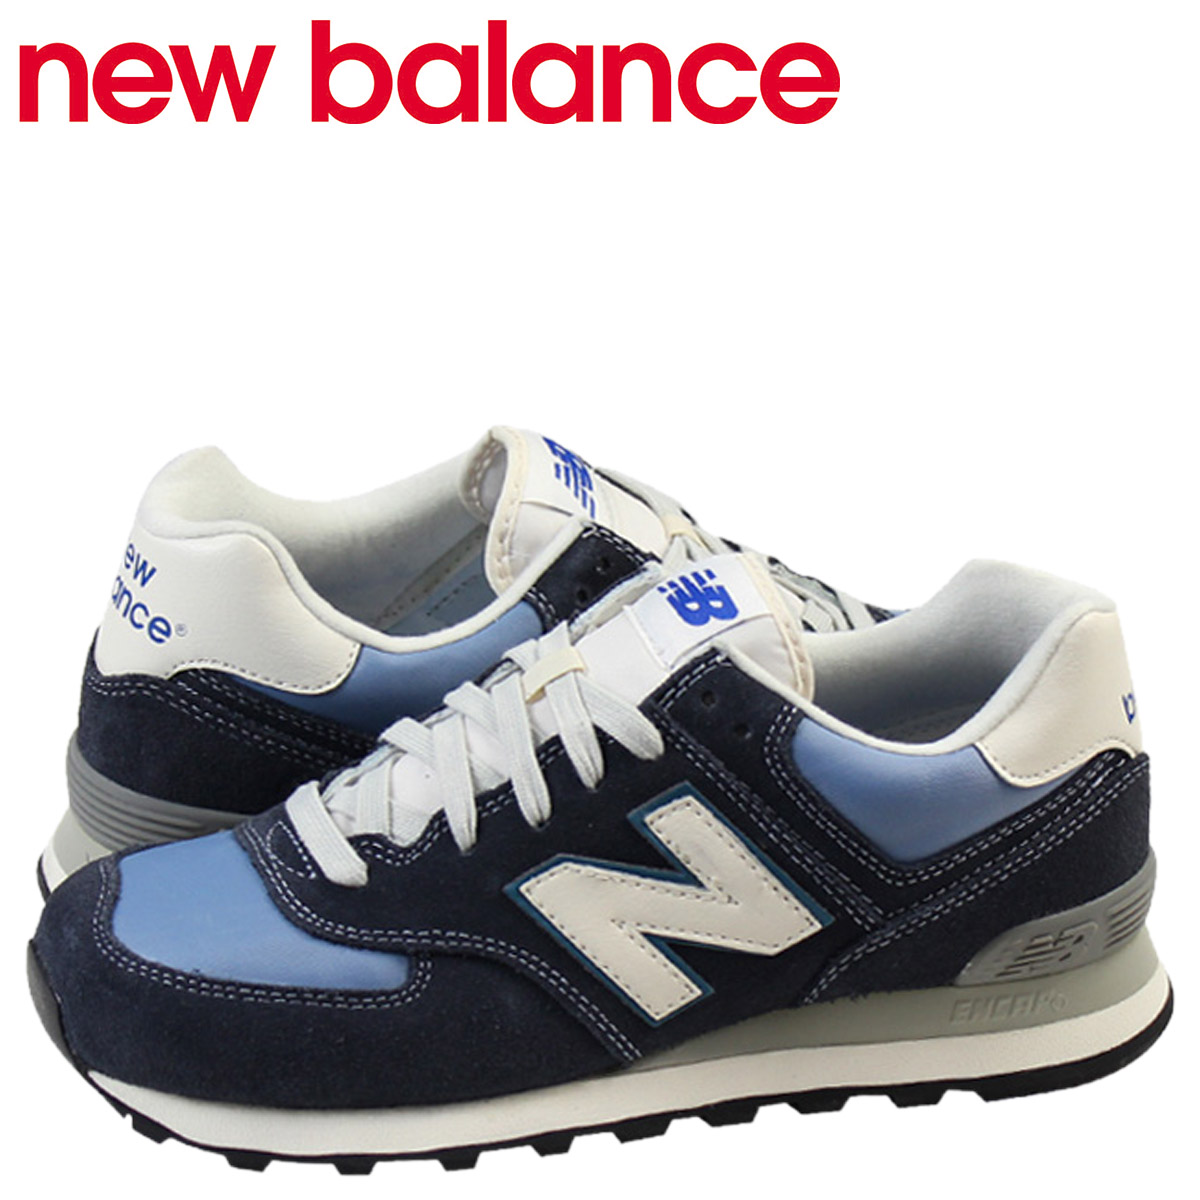 new balance 574 blue grey